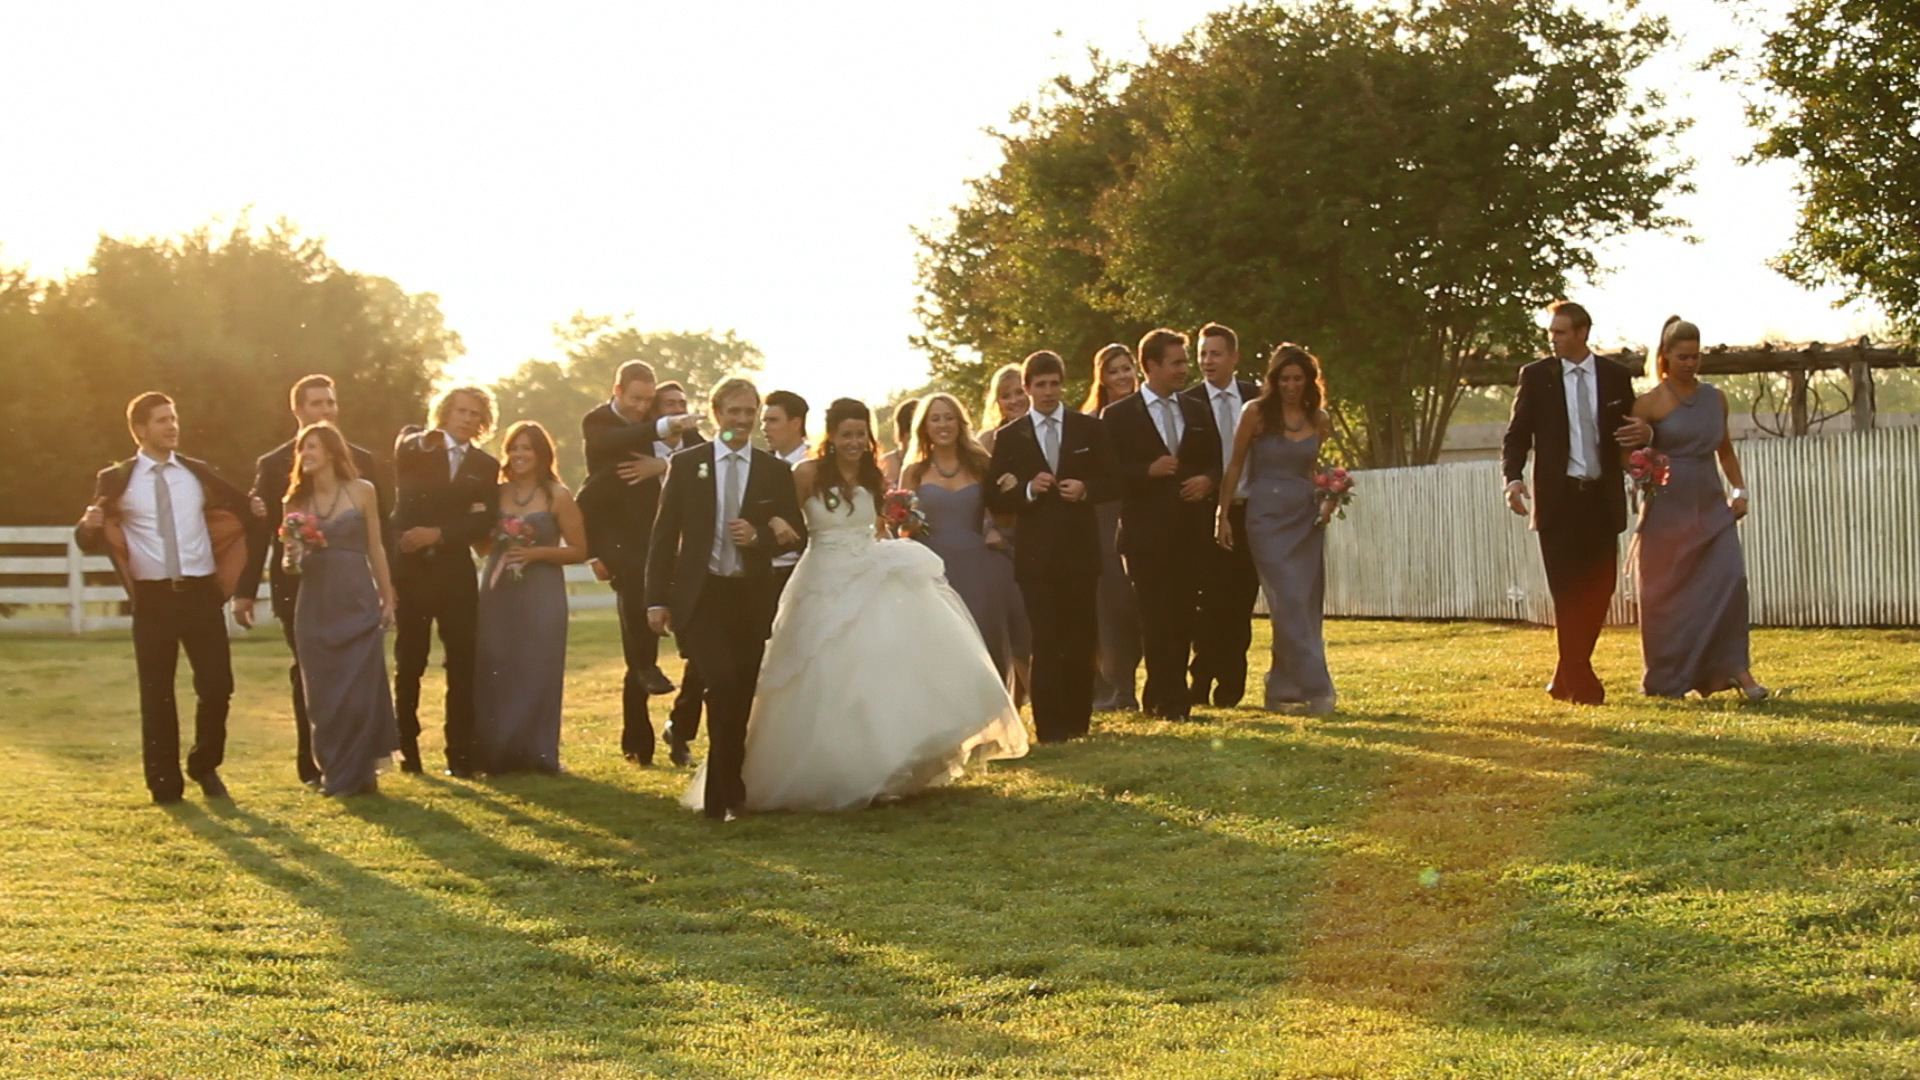 Lauren and Dustin's wedding videography in Nashville, TN